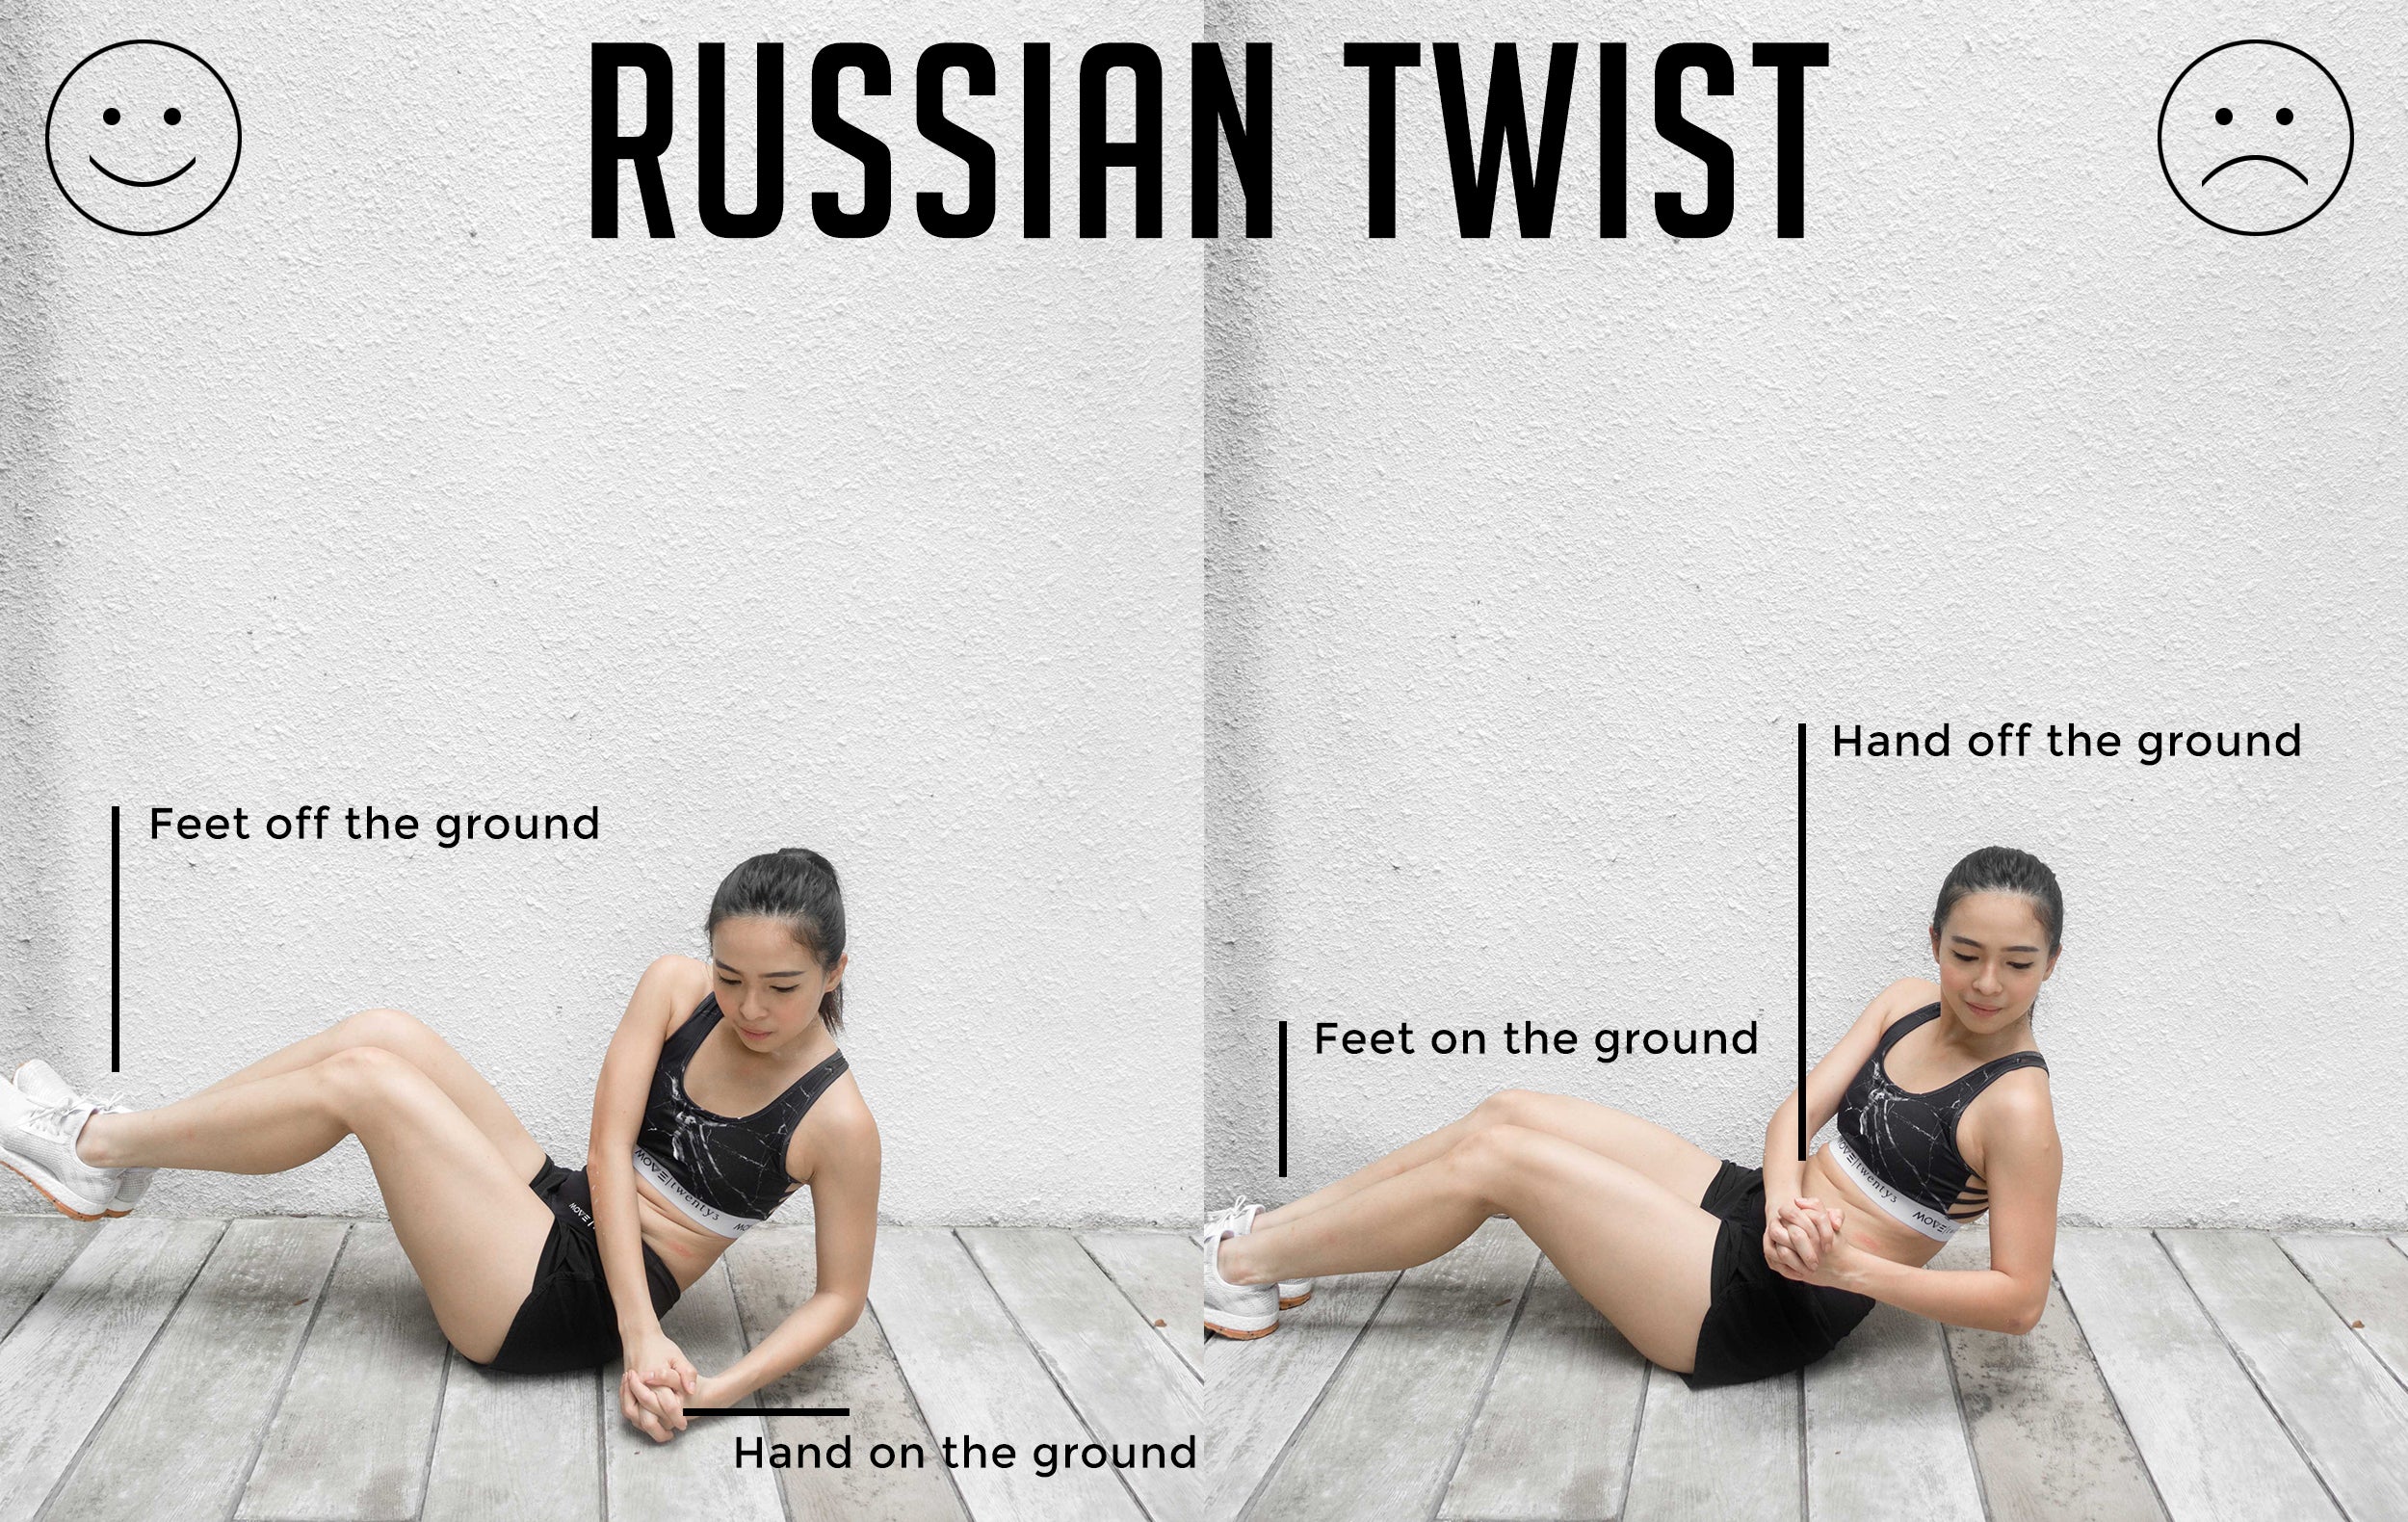 Russian Twist Good Versus Bad Form